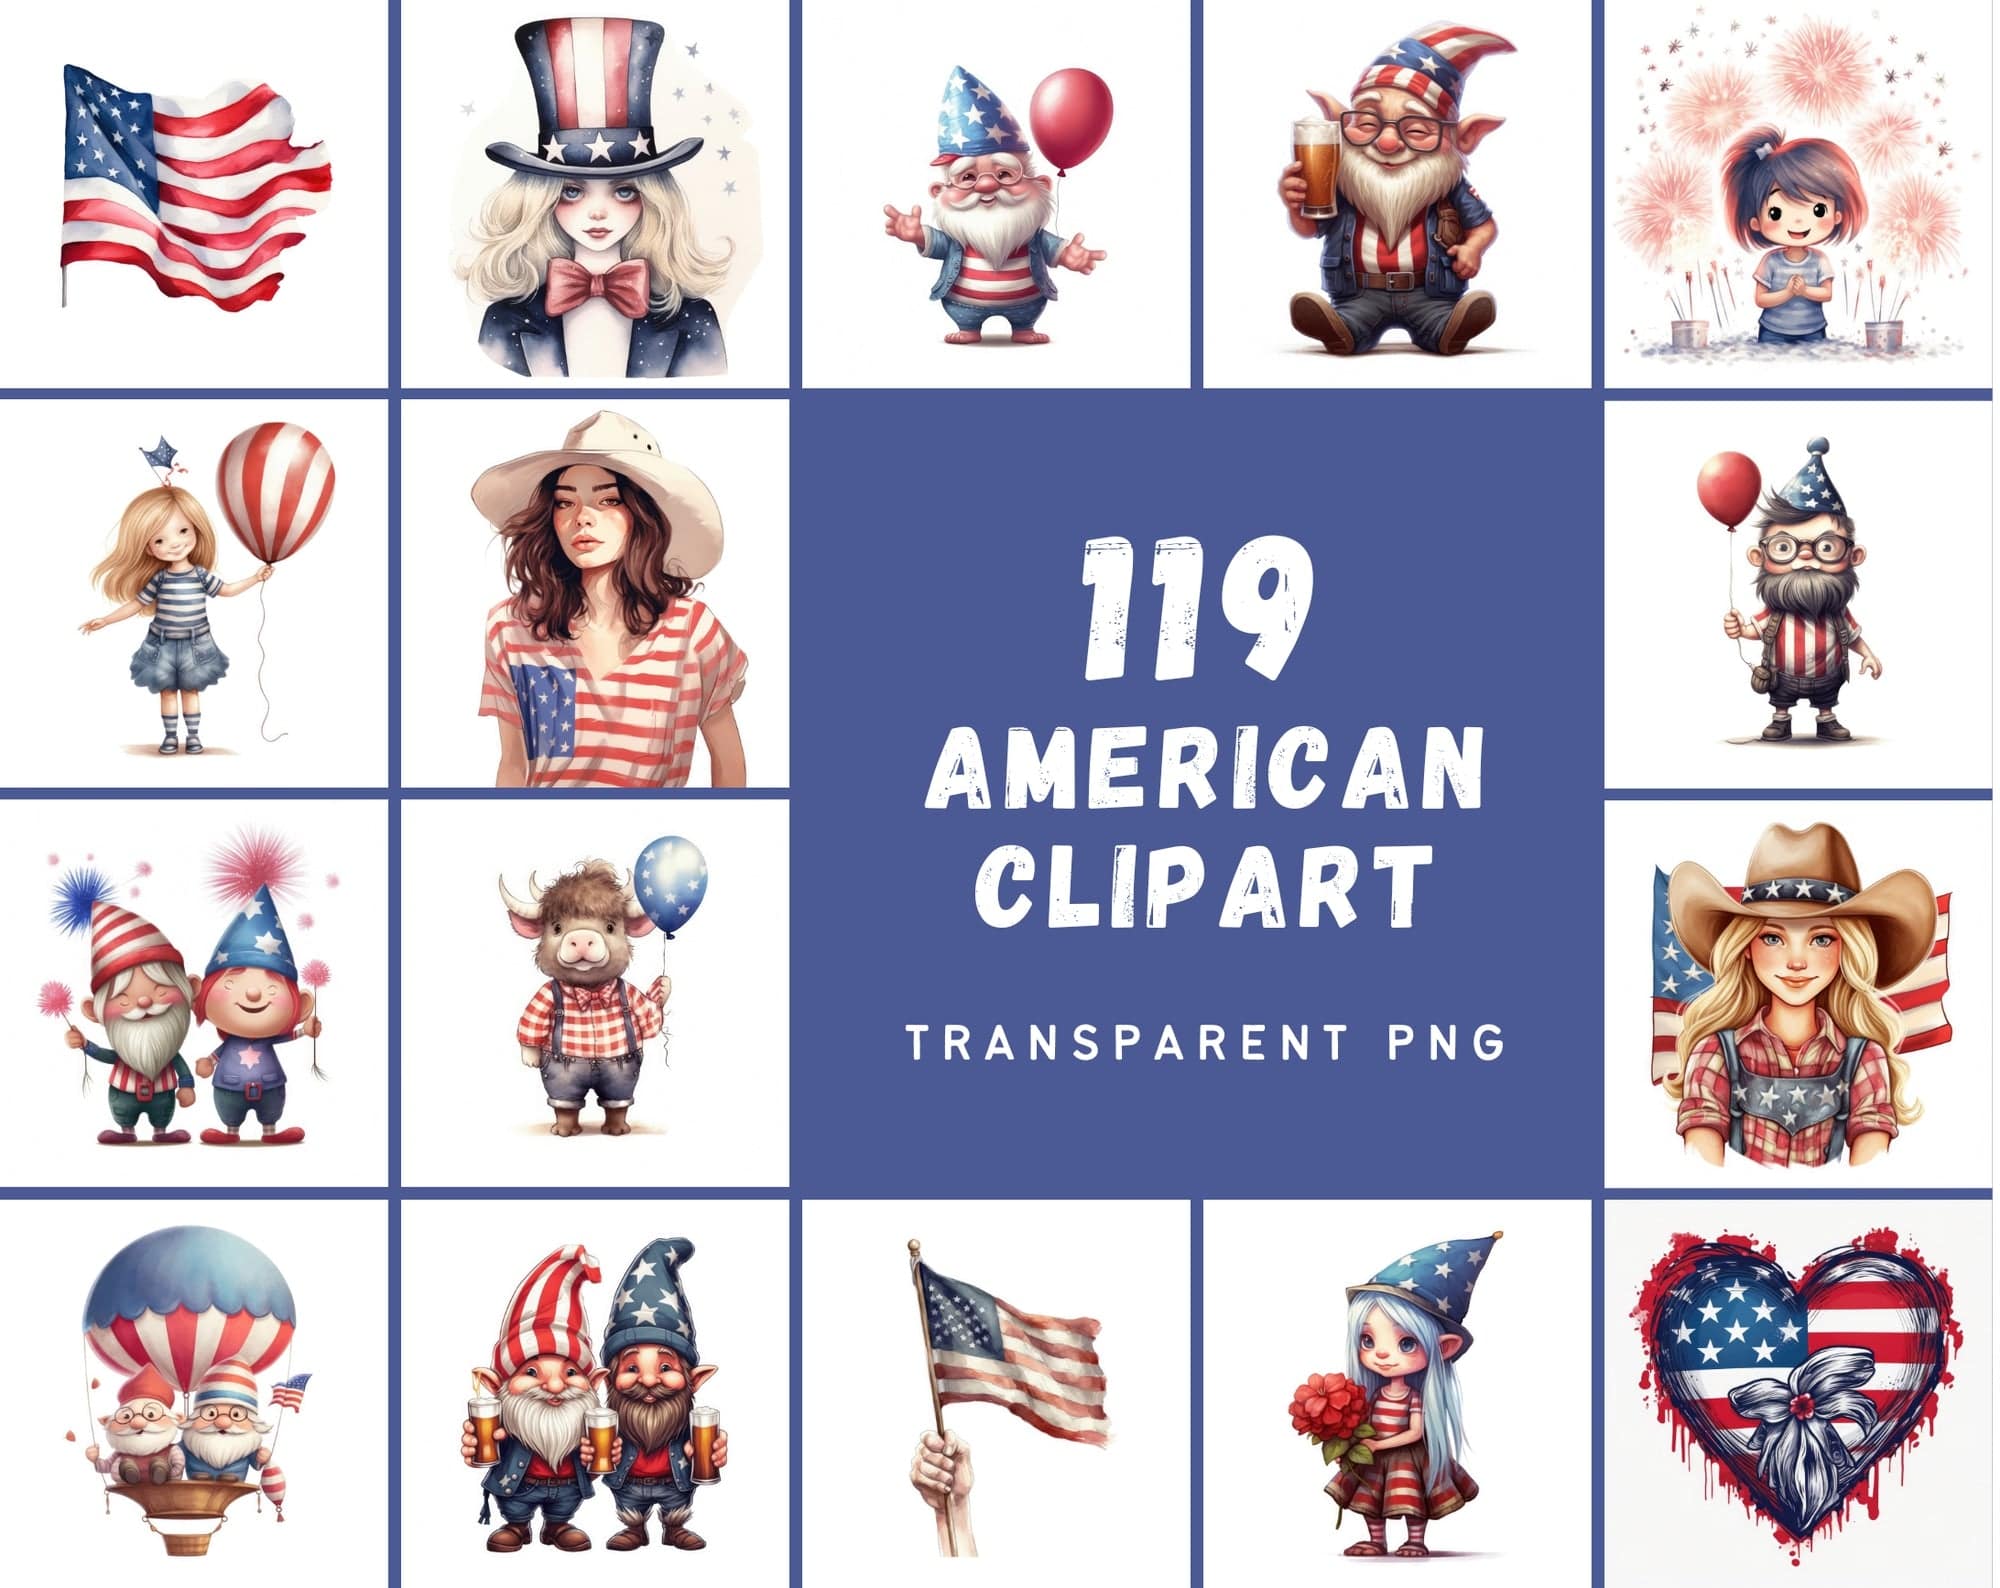 American-Themed Colorful Clipart PNGs Digital Download Sumobundle